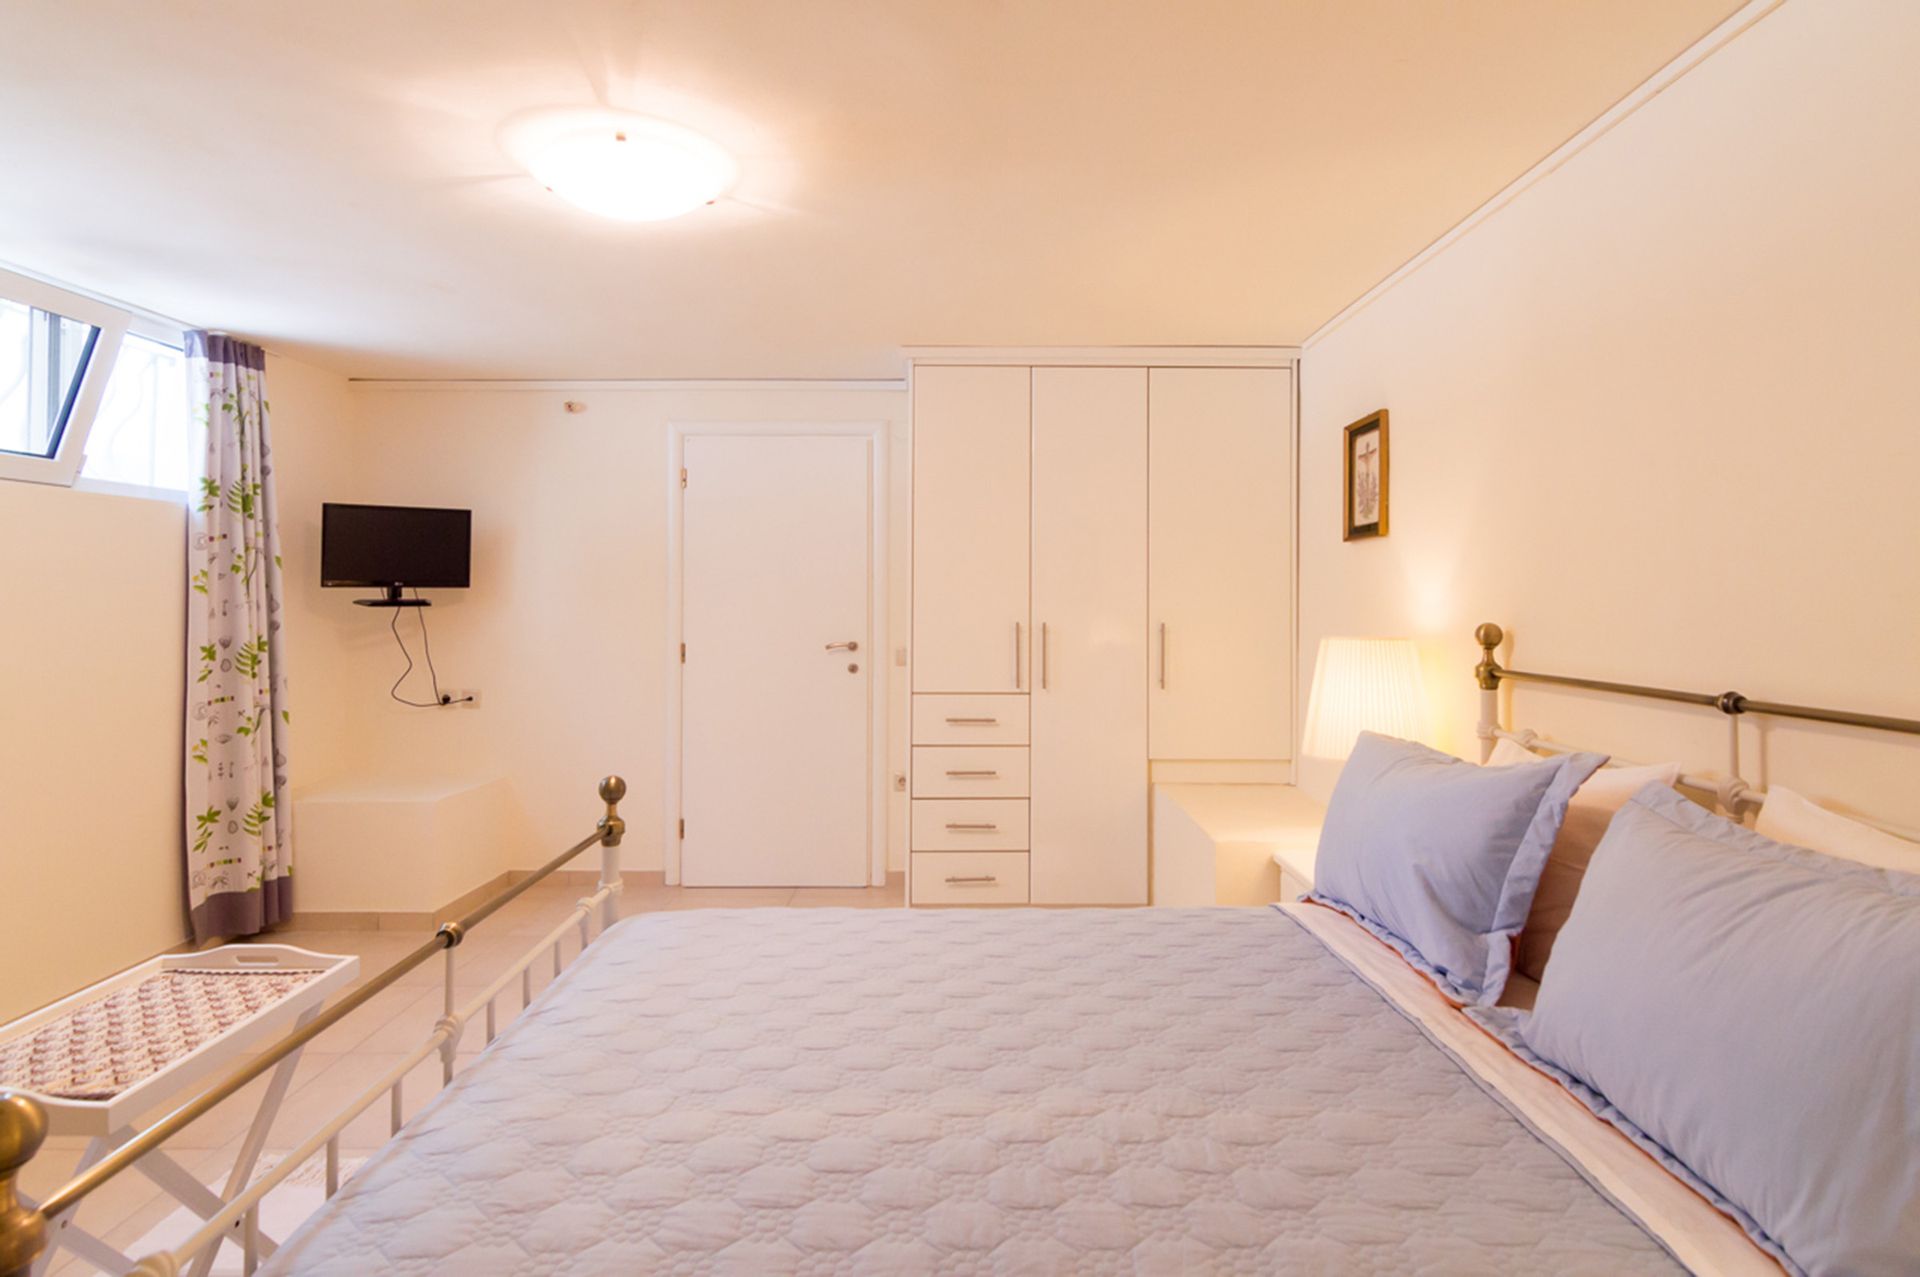 Exclusive Apartment by Athena Villas - Γούβες, Κρήτη ✦ 2 Ημέρες (1 Διανυκτέρευση) ✦ 2 άτομα ✦ 1 ✦ 01/04/2022 έως 30/09/2022 ✦ Υπέροχη Τοποθεσία!